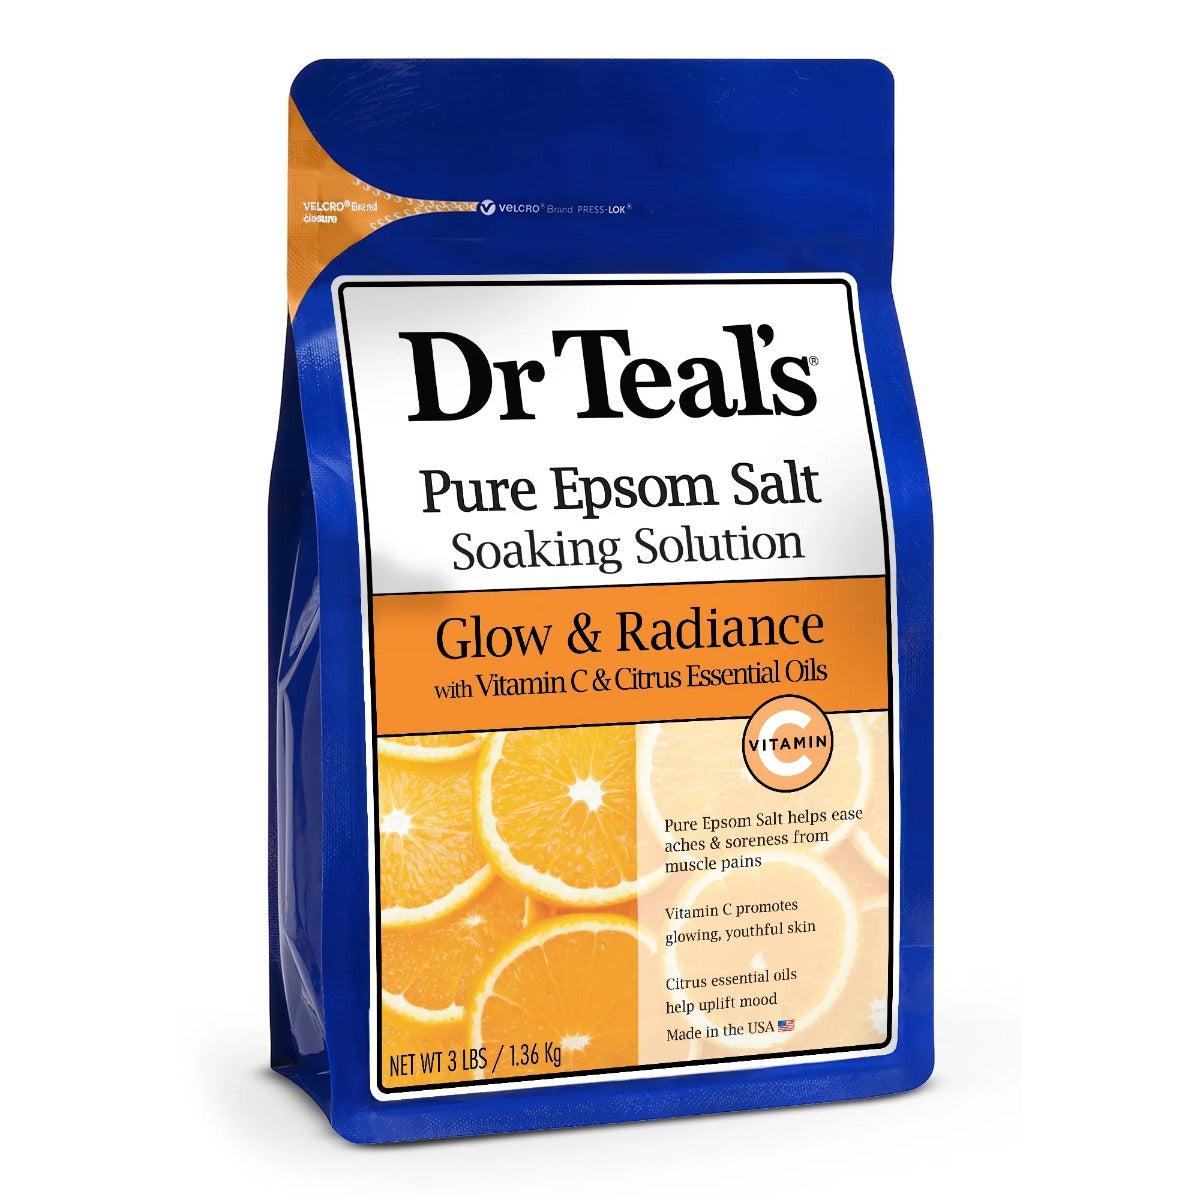 Dr. Teal's Pure Epsom Salt Glow & Radiance with Vitamin C & Citrus Essential Oils 1.36kg